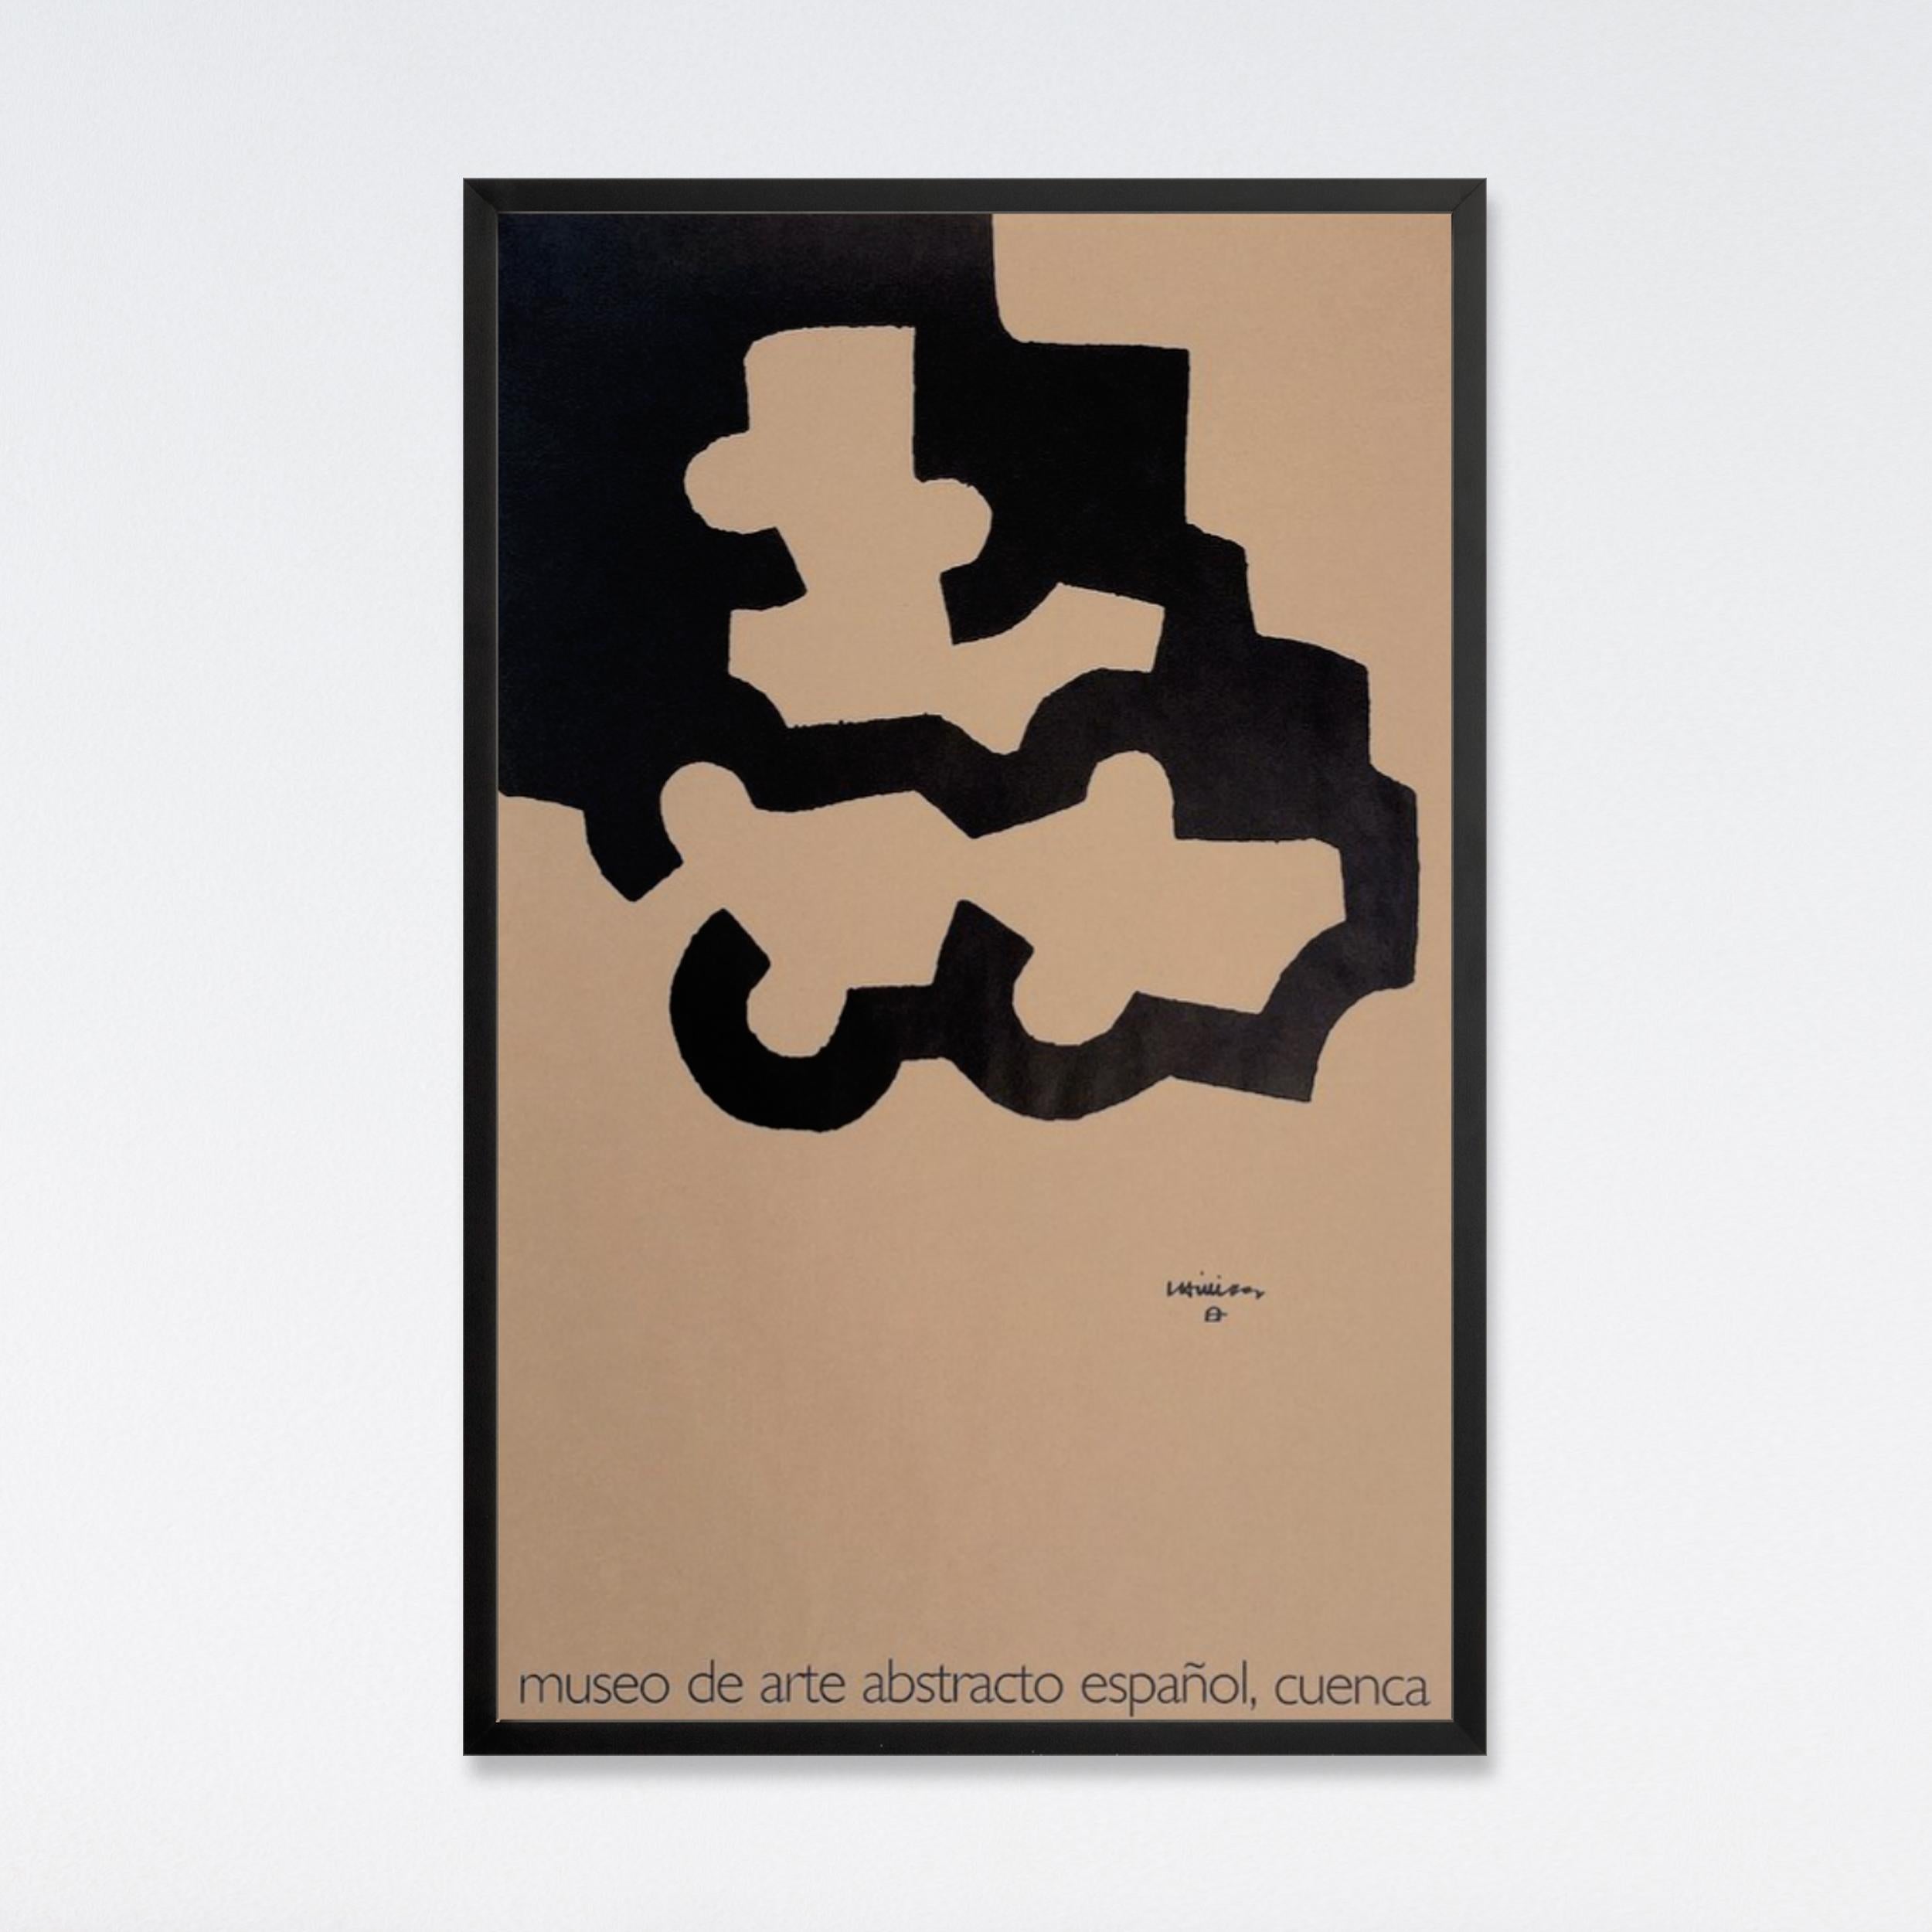 Eduardo Chillida, Sin titulo (Untitled), 1994 Lithographic poster, geometric 1